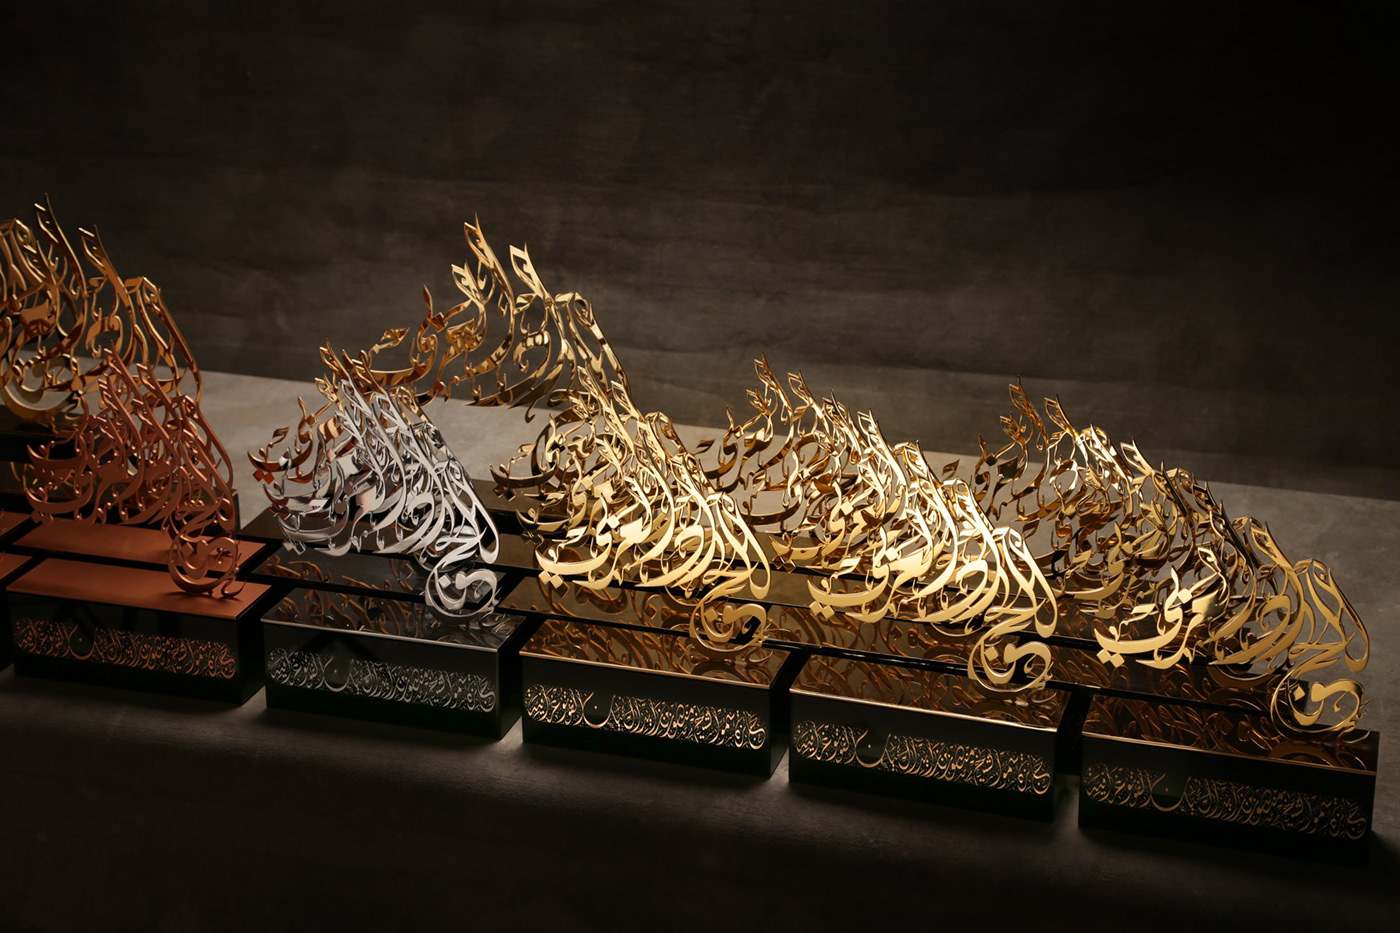 horse UAE zayed emarates arabian arabic Photography 